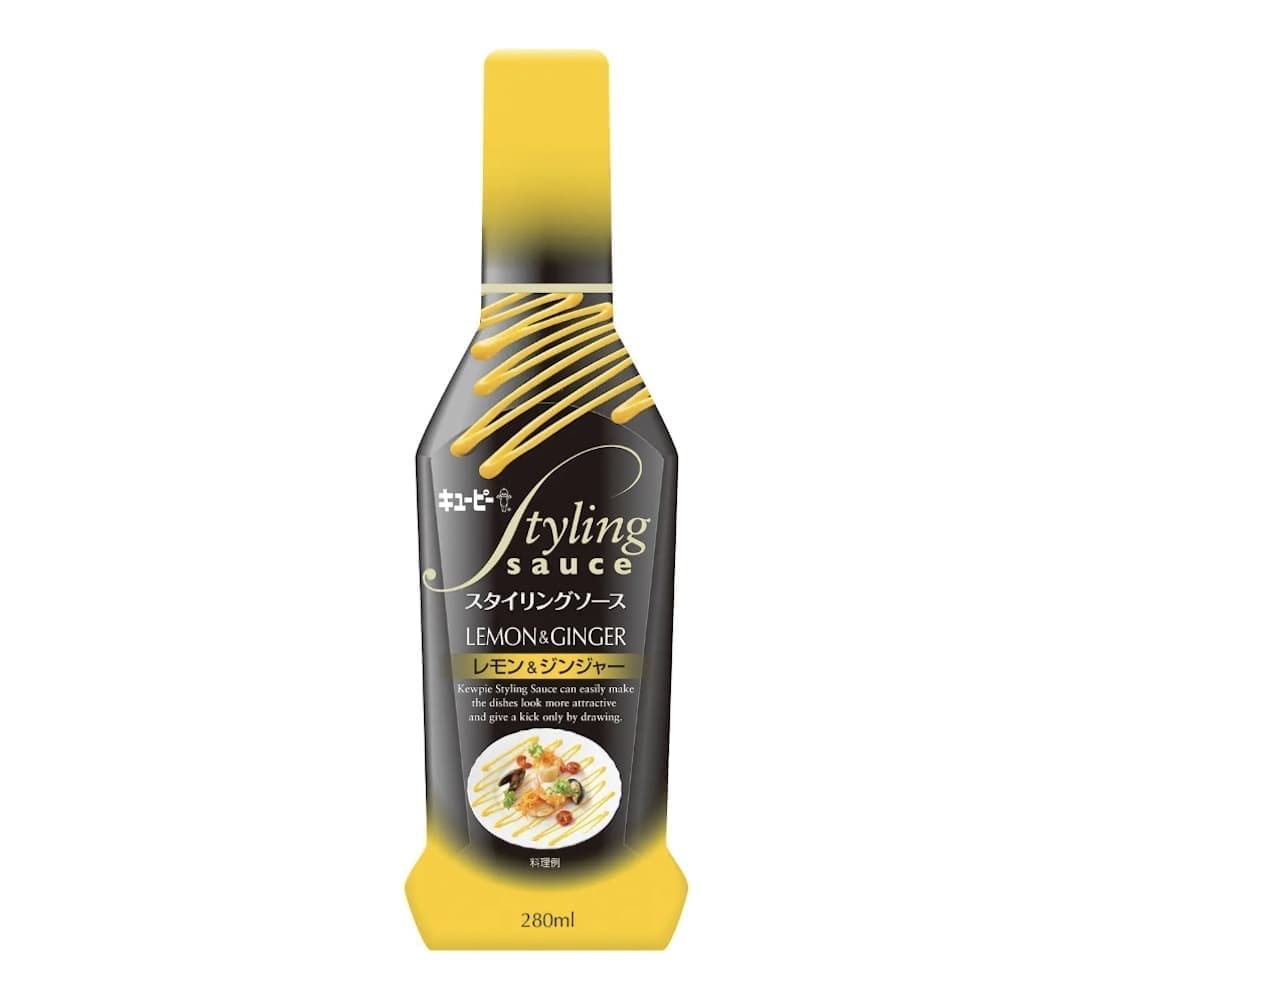 Kewpie "Styling Sauce Lemon & Ginger